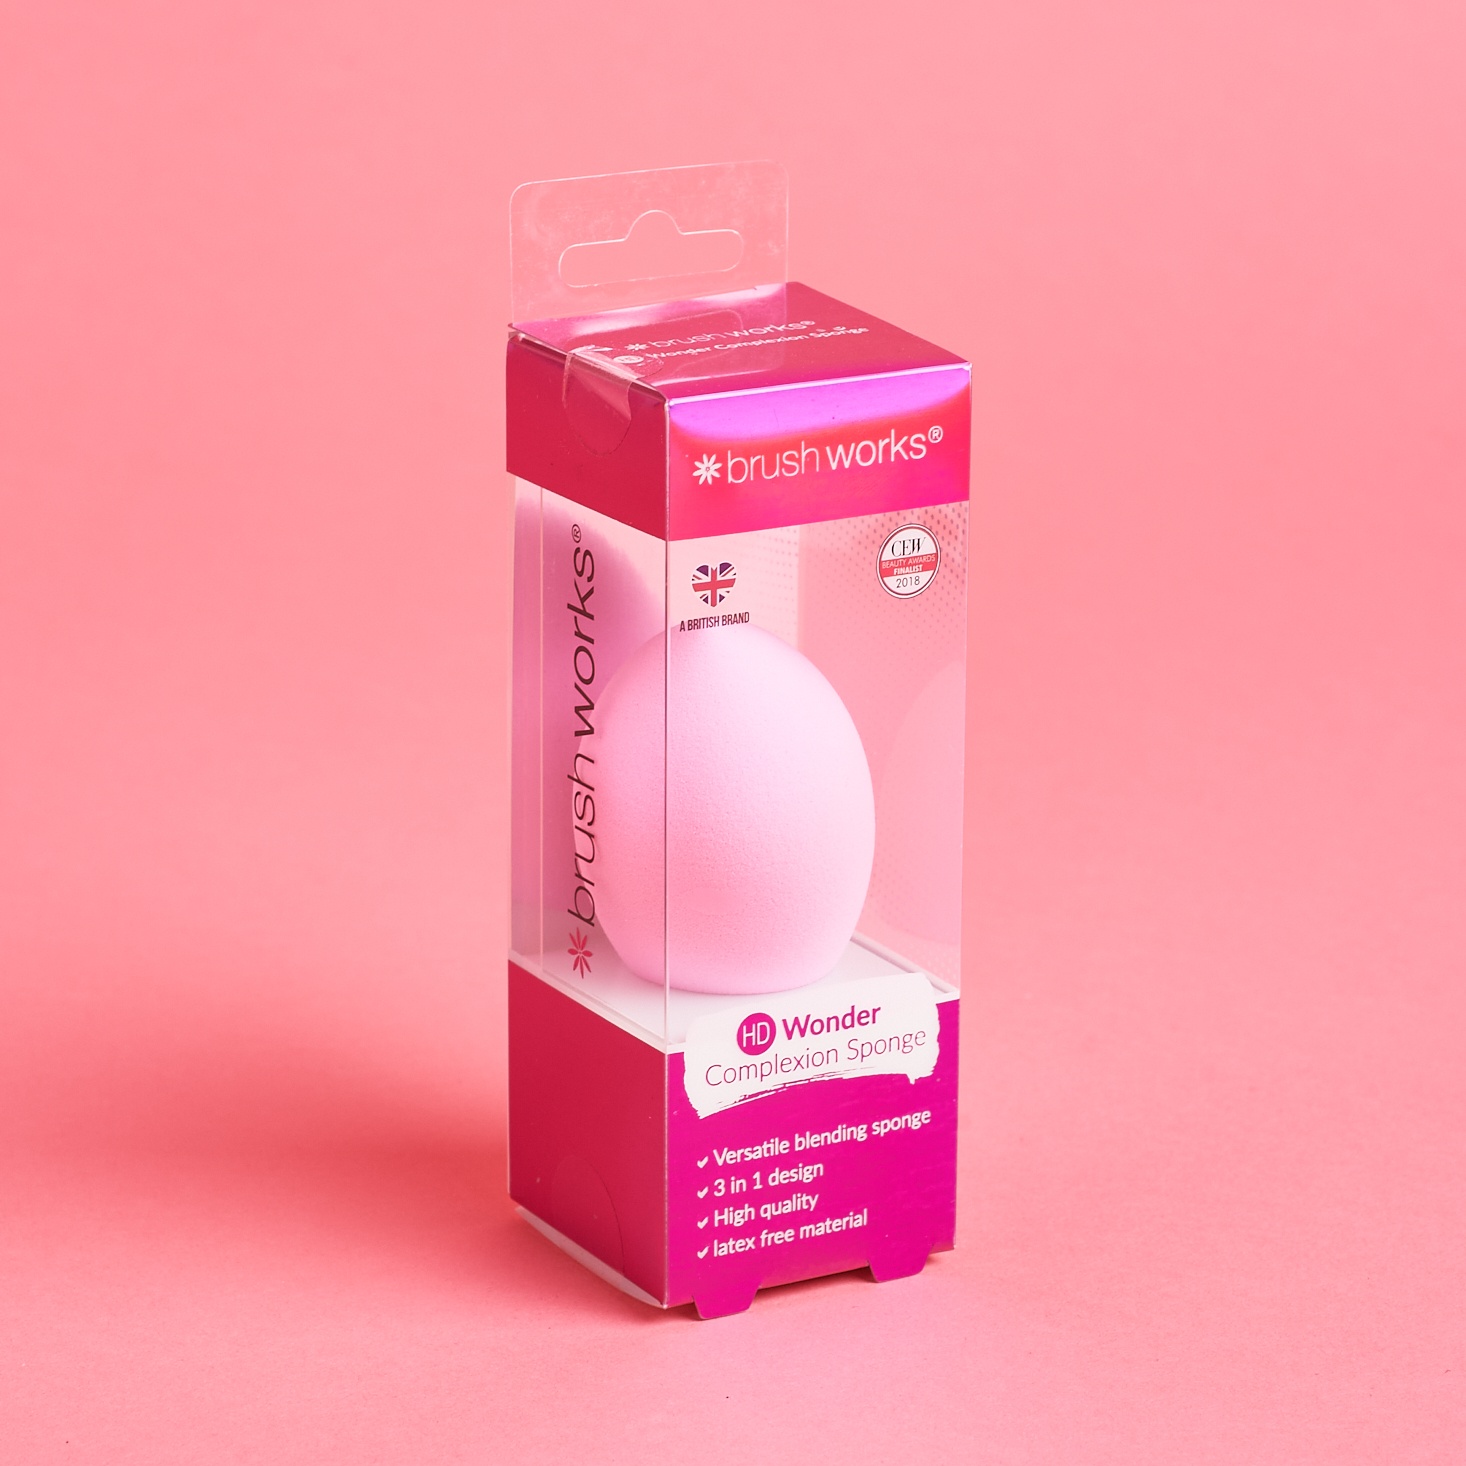 hot pink packaging with light pink beauty sponge inside